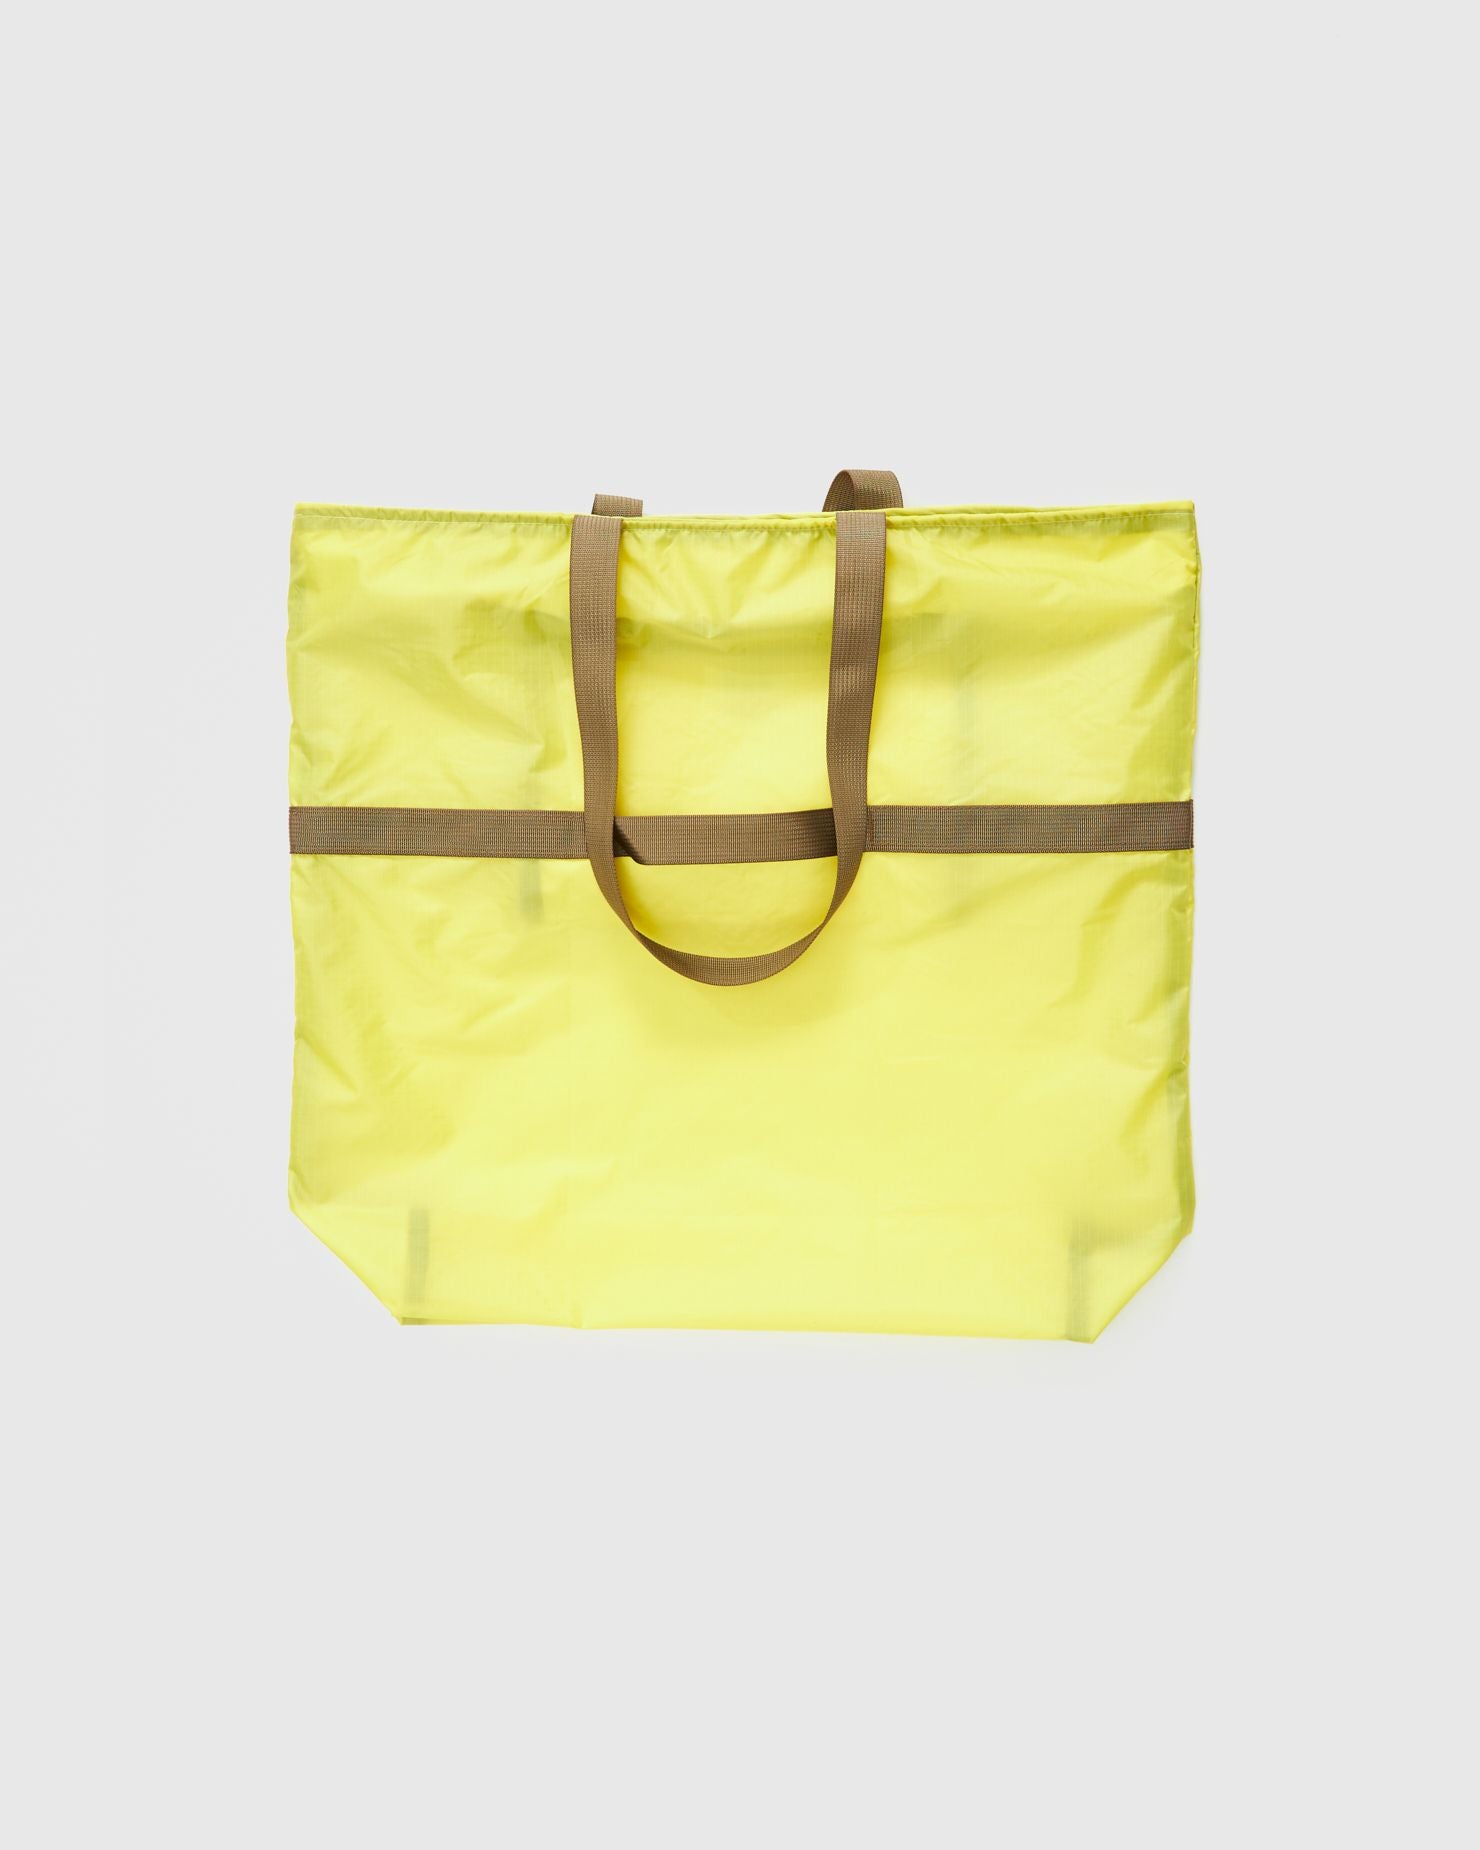 Nylon 2 Way Bag in Yellow/Coyote